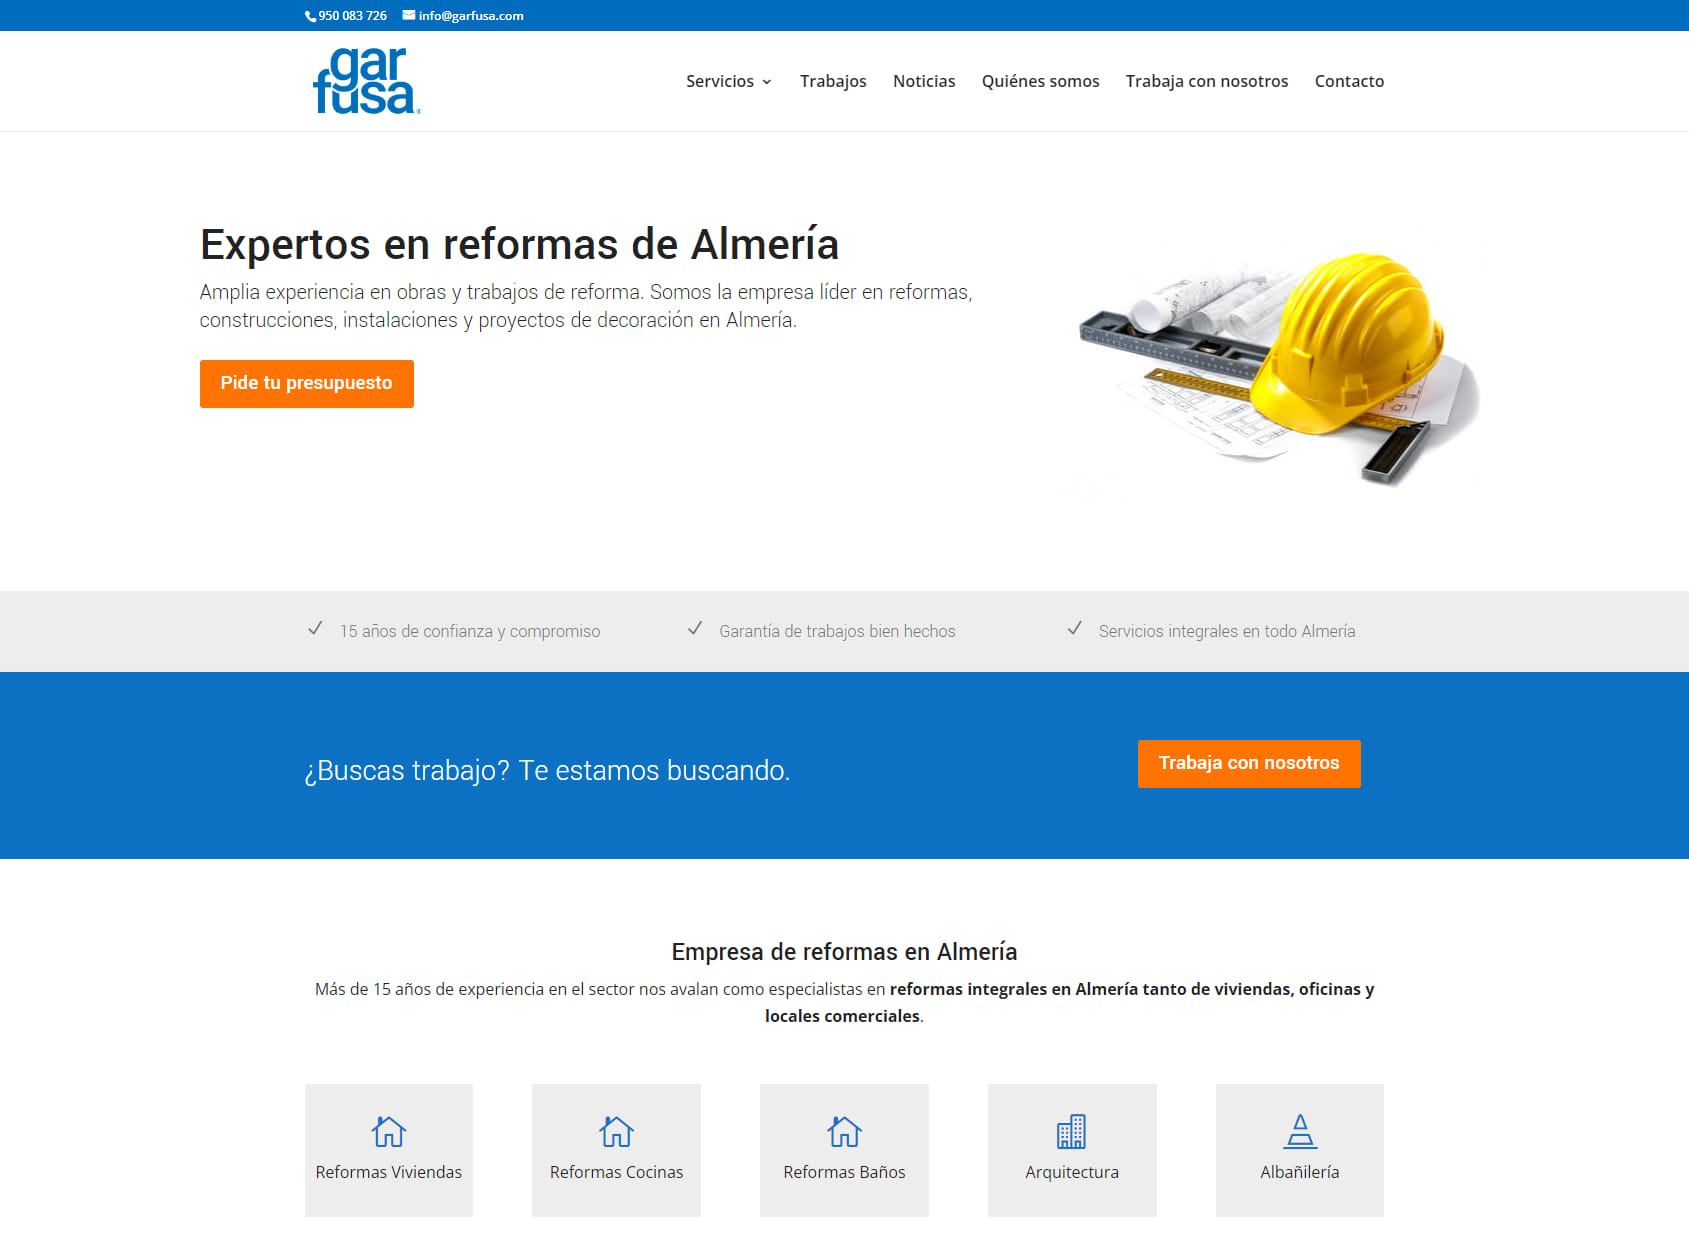 Almería Reforms company. Garfusa